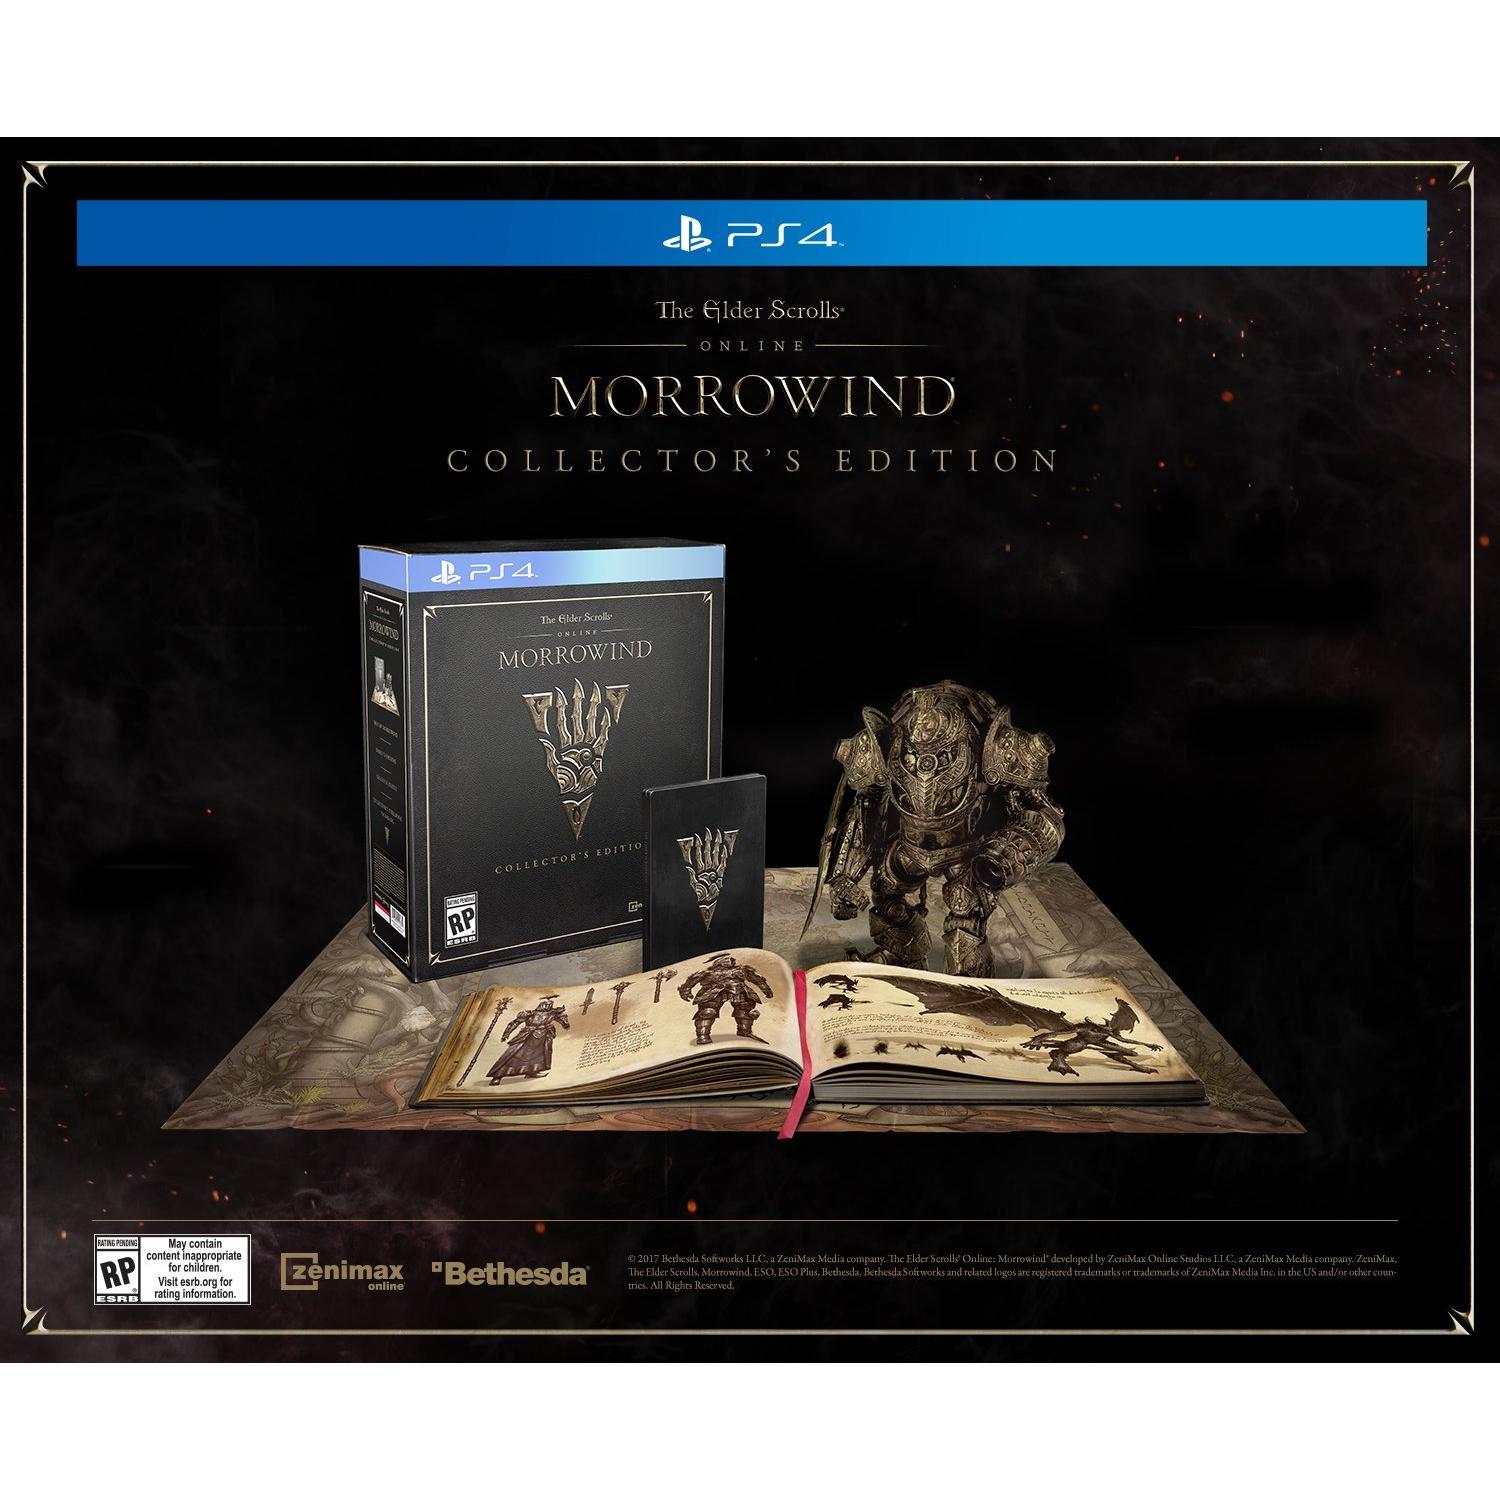 PS4 - The Elder Scrolls Online Morrowind Édition Collector (scellée)